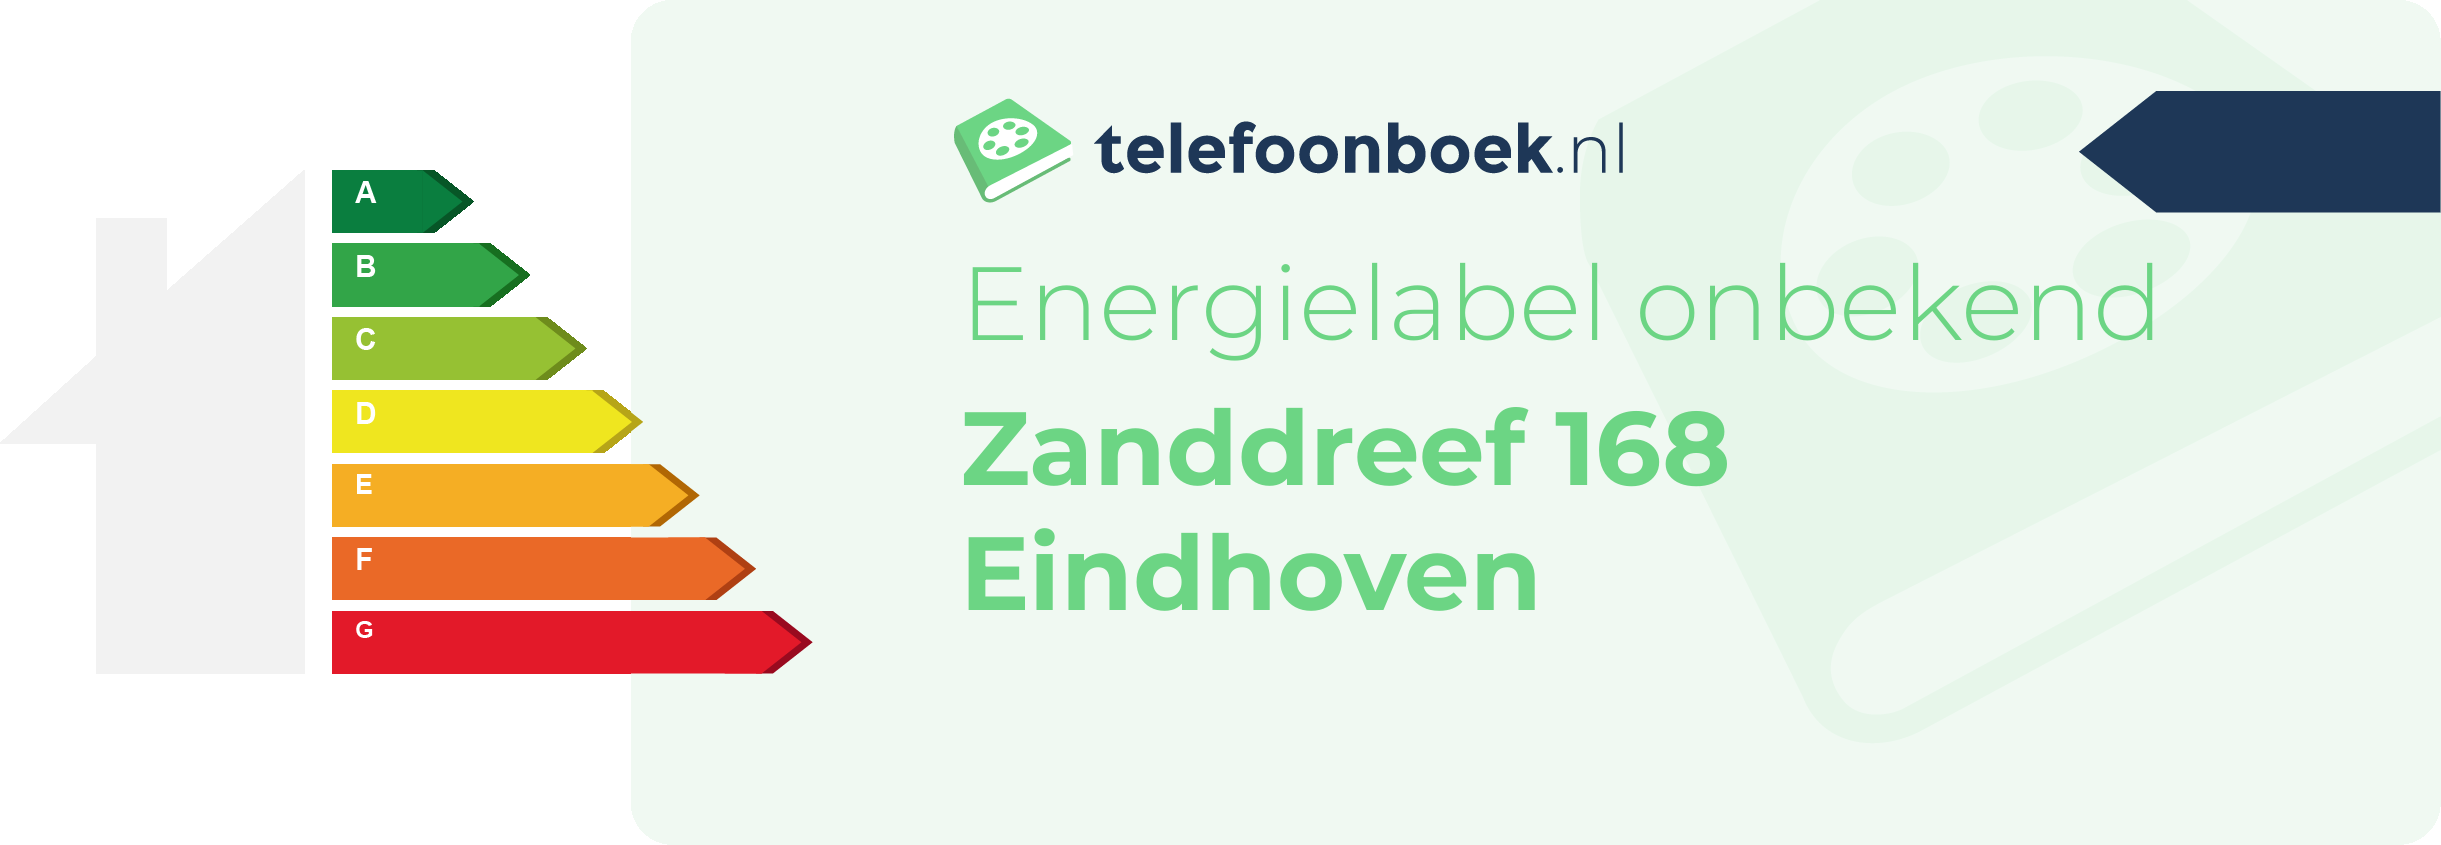 Energielabel Zanddreef 168 Eindhoven